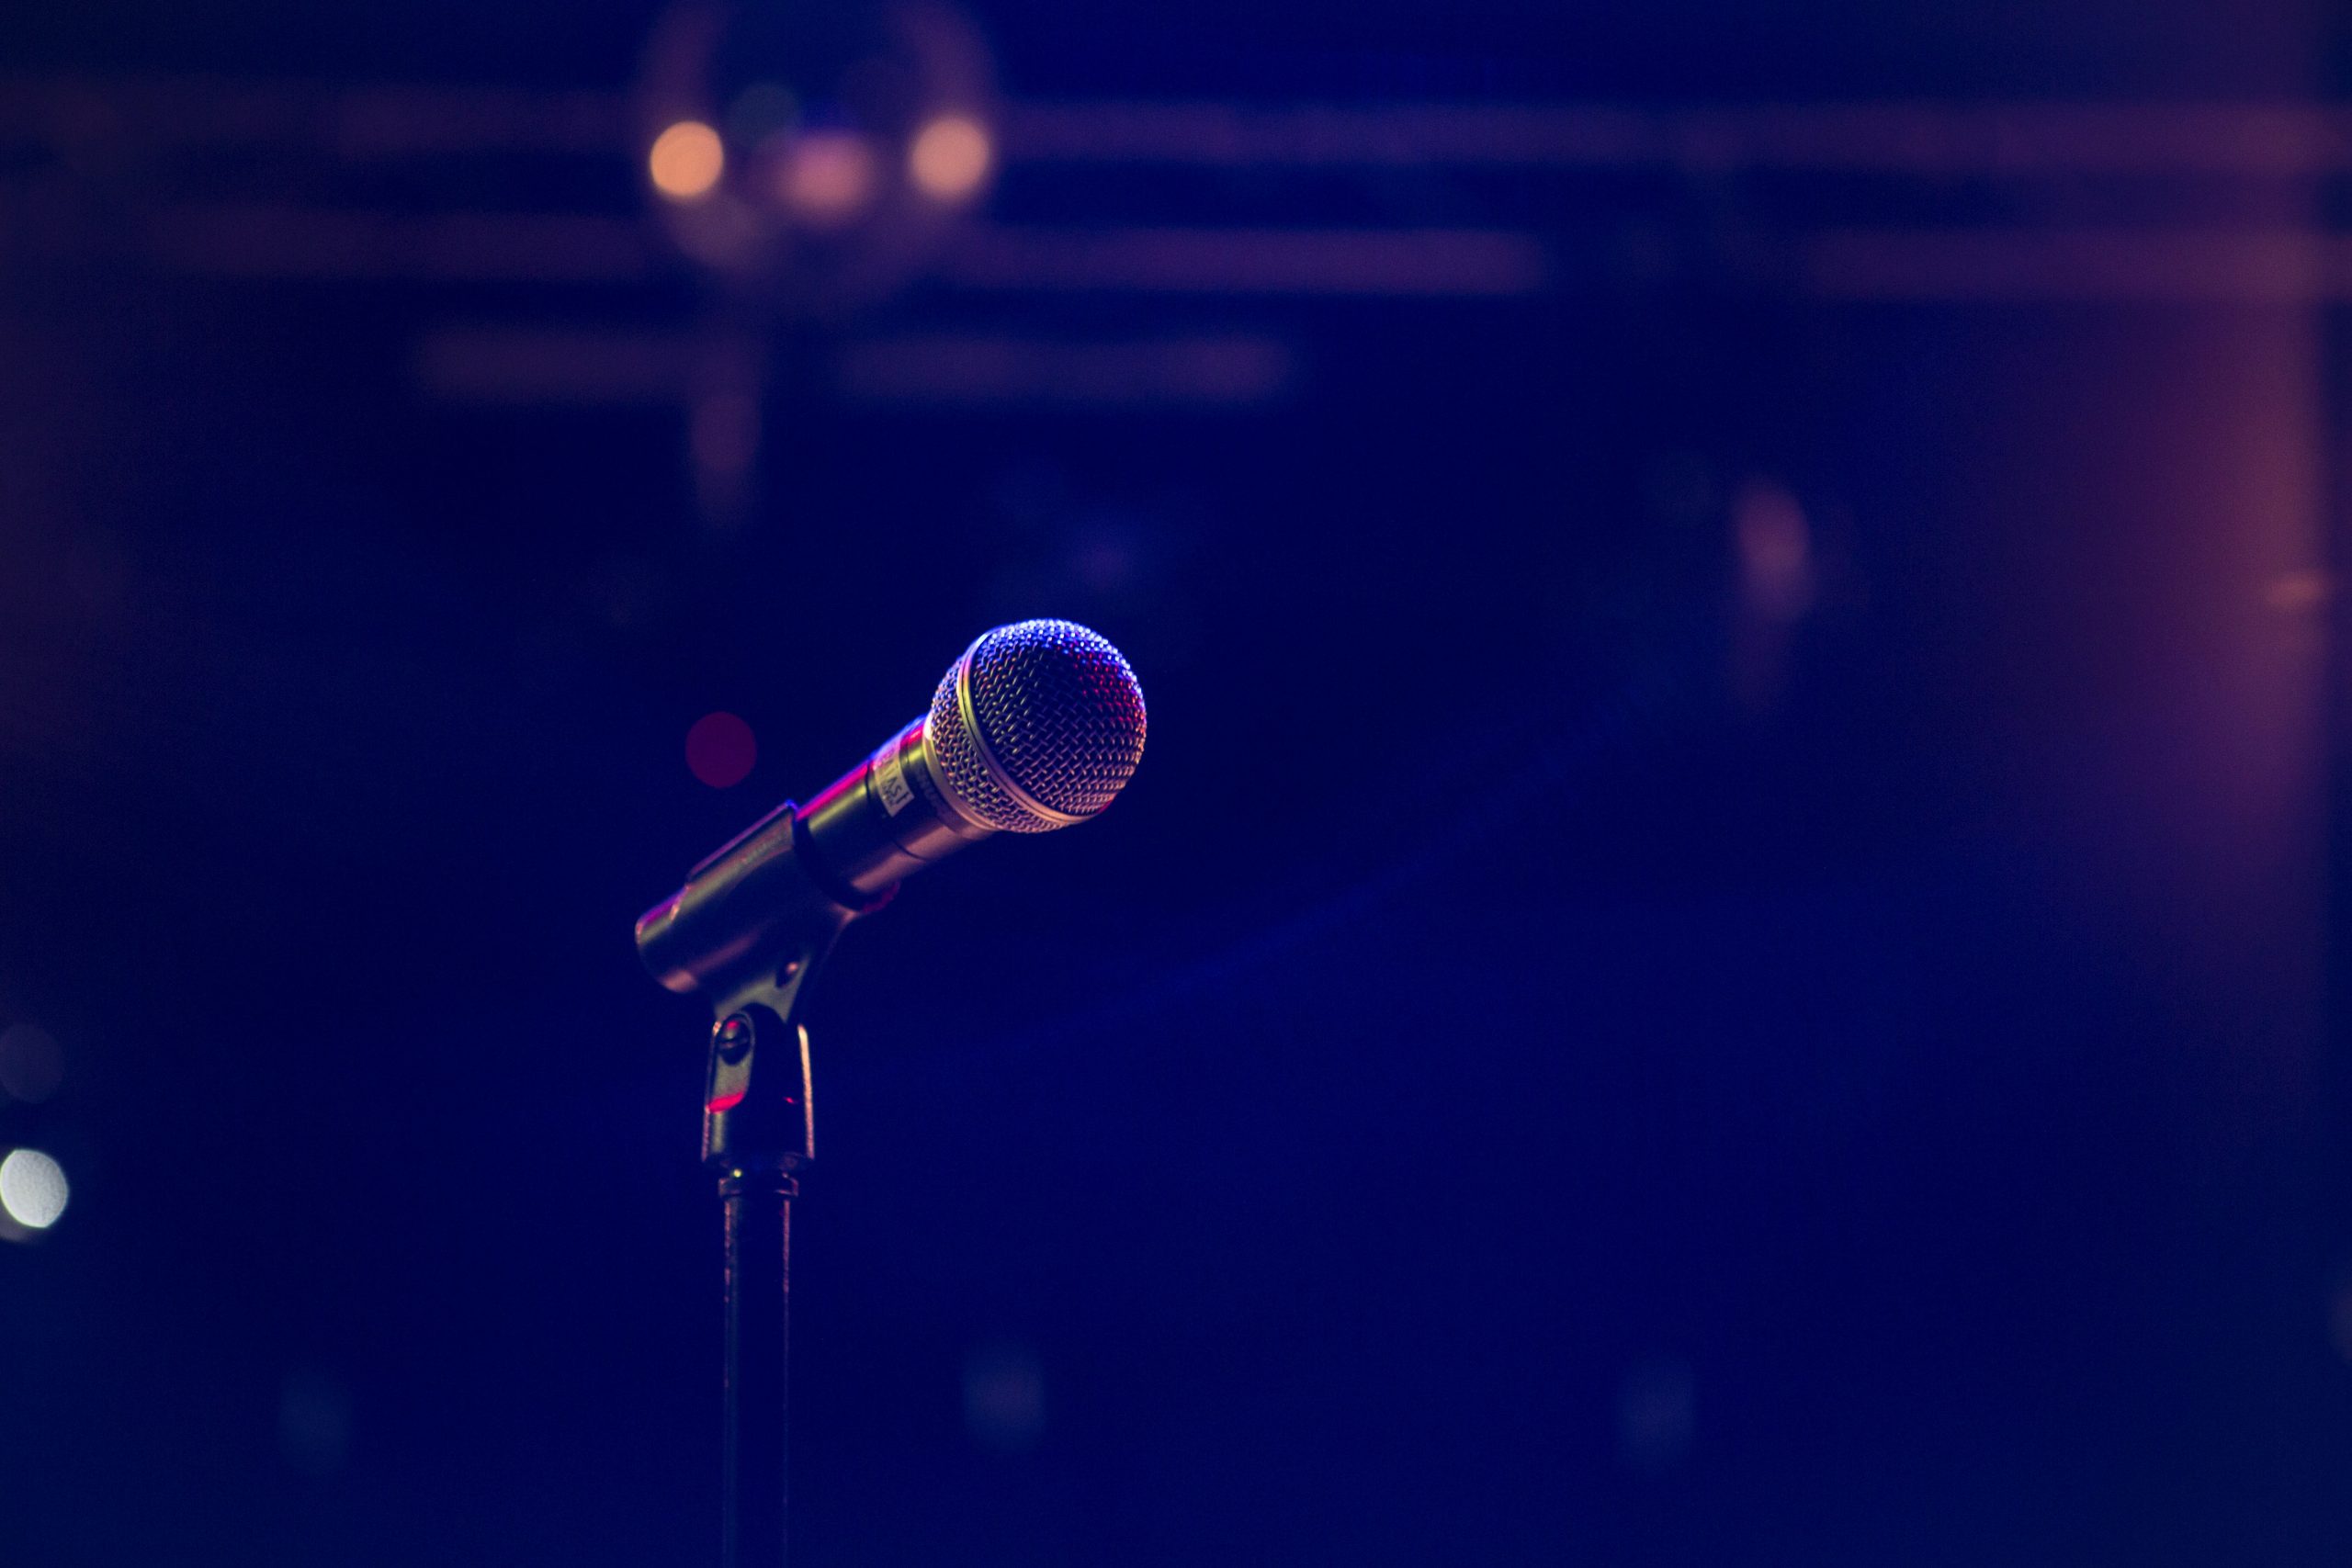 darkly lit microphone on an empty stage